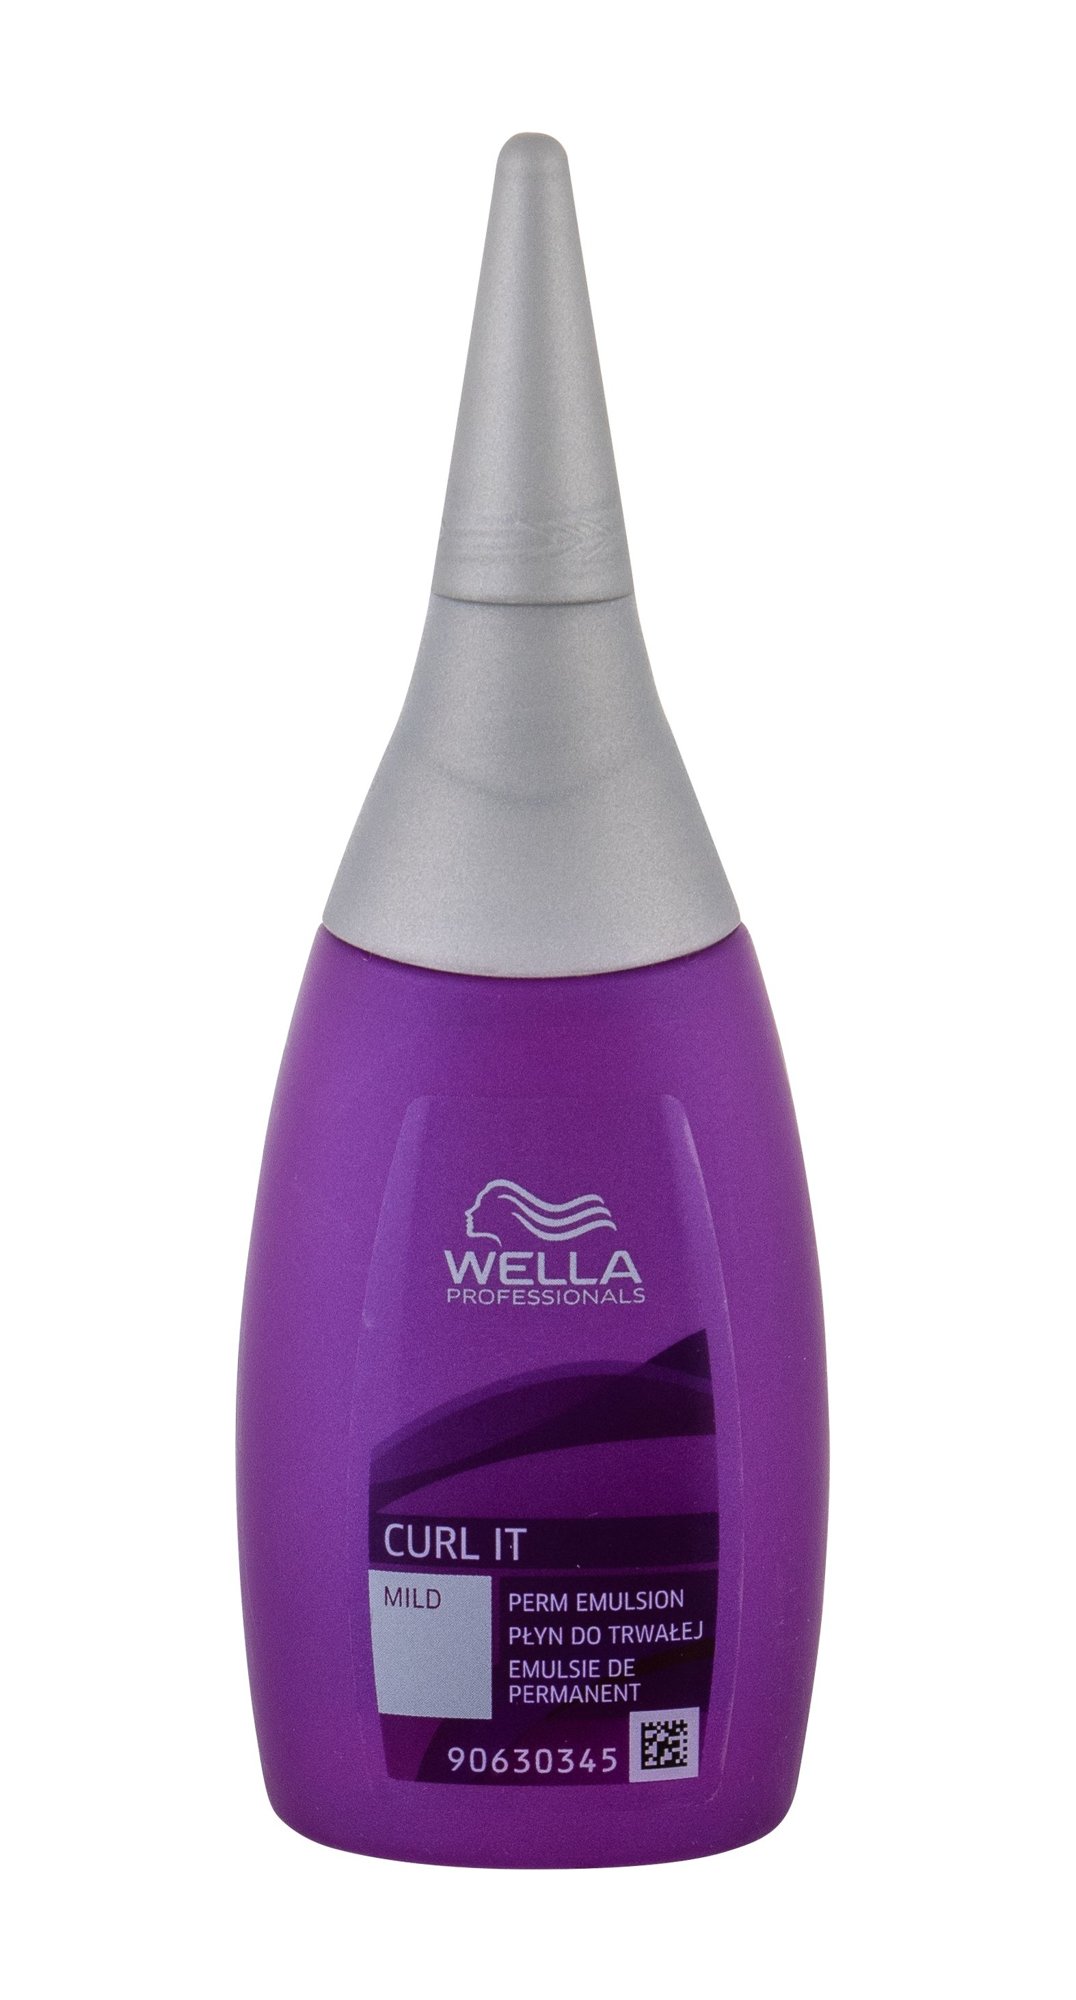 Wella Curl It Mild Emulsion garbanų formavimo priemonė